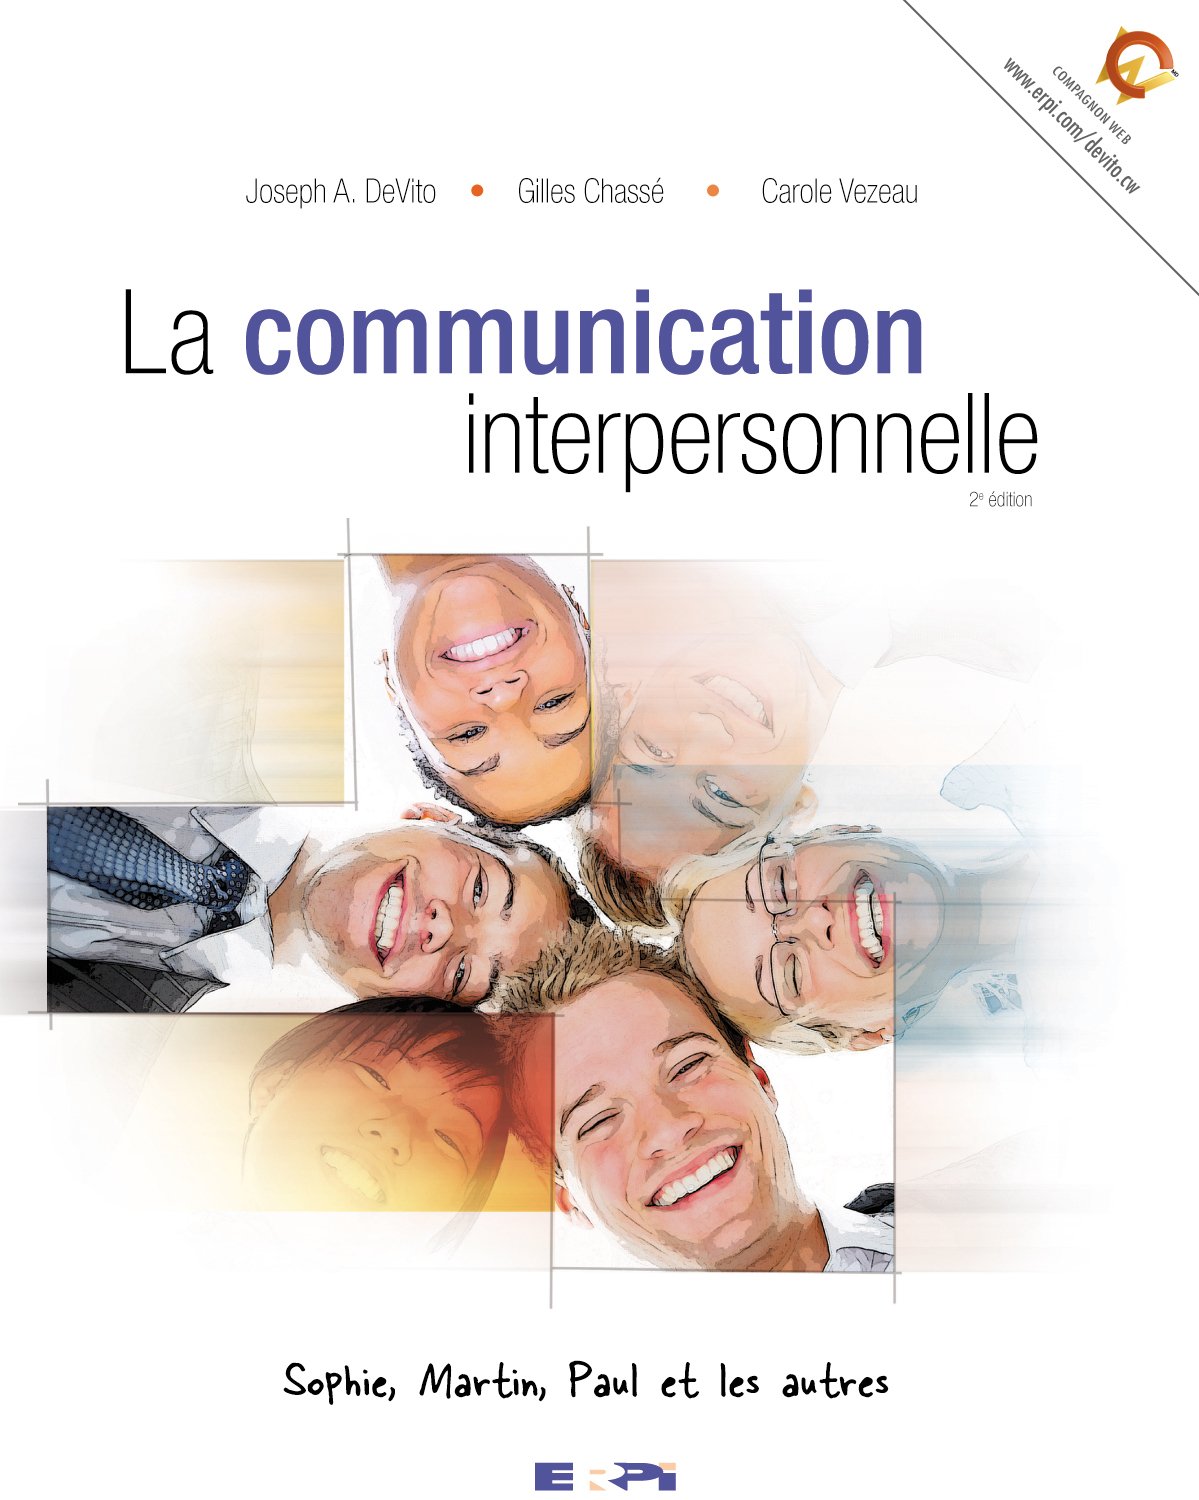 La communication interpersonnelle (2e édition) - Joseph Devito